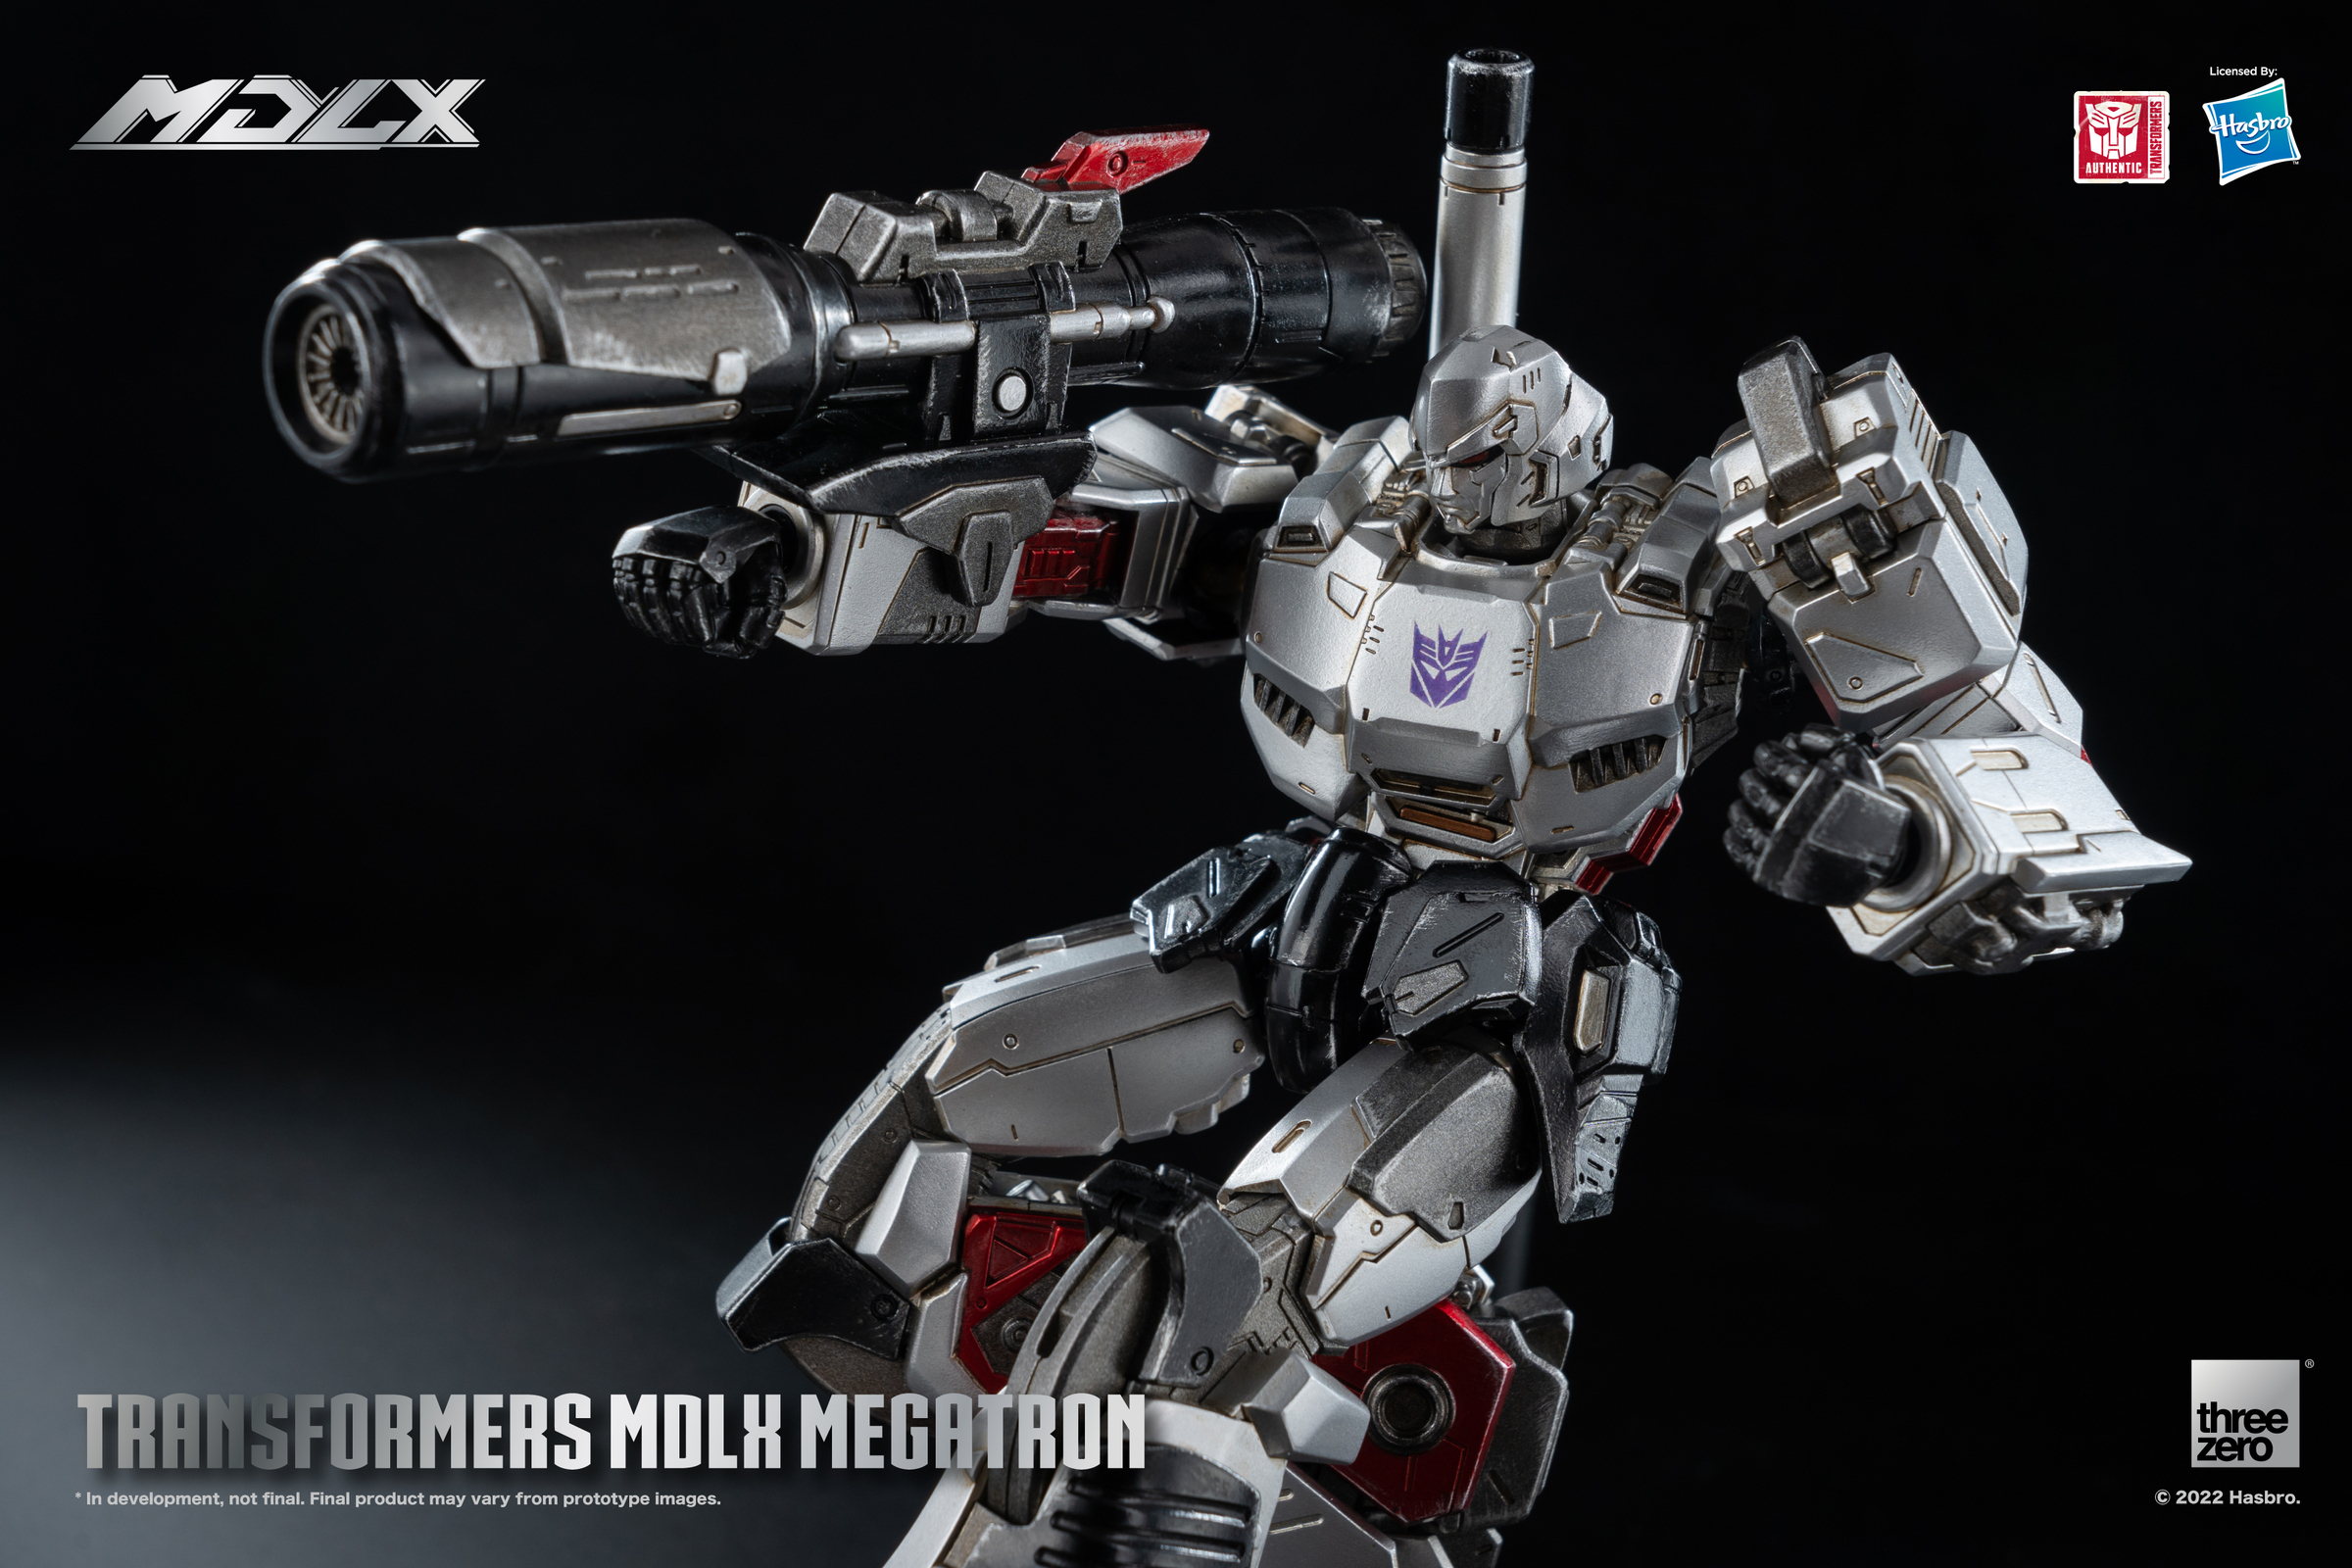  Transformers MDLX Megatron (11)